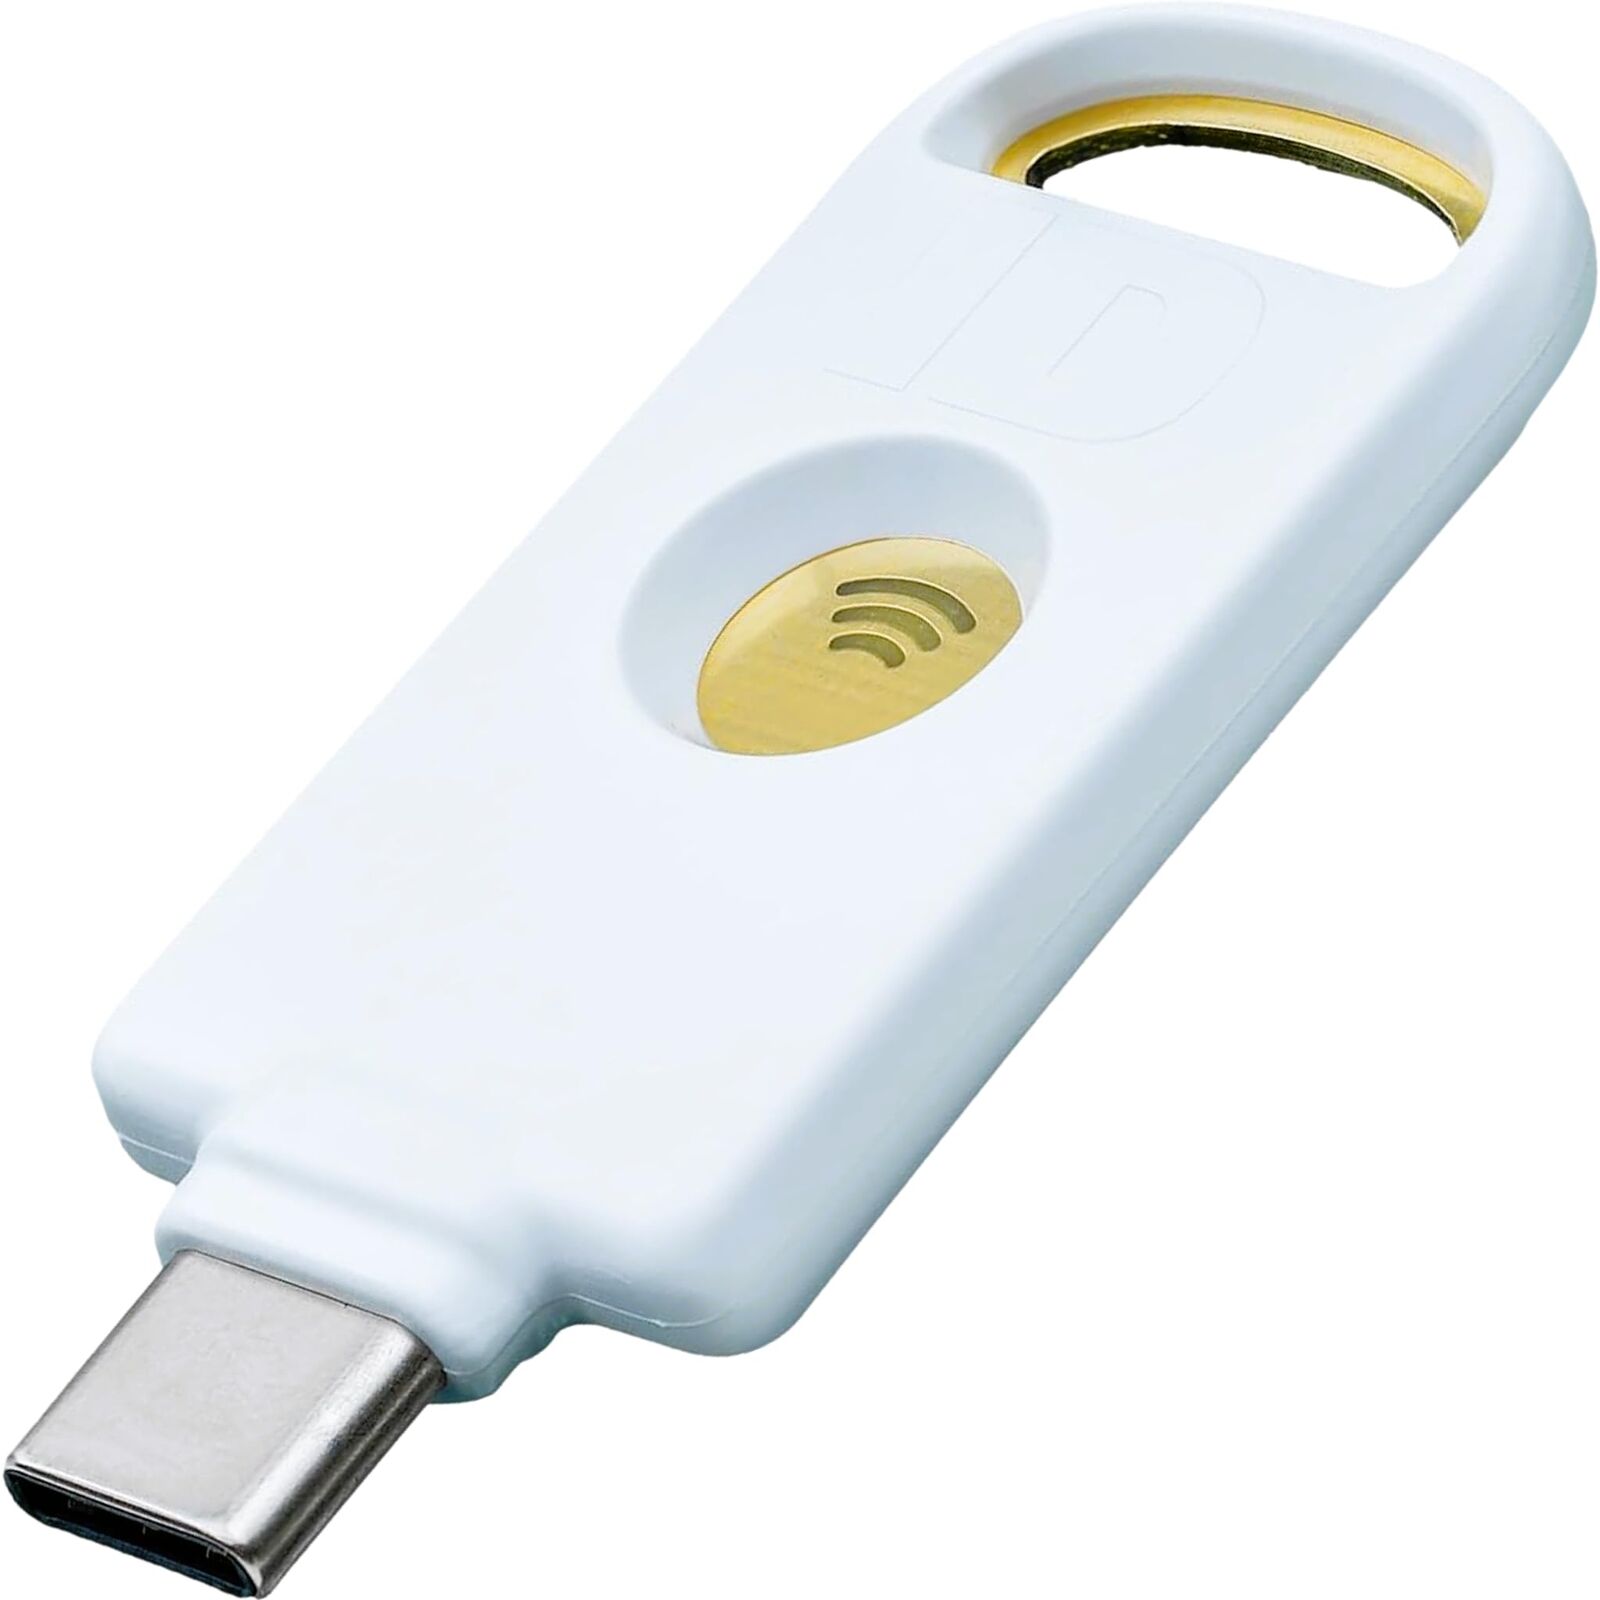 FIDO2 NFC Security Key USB C FIDO U2F PIV TOTP HOTP WebAuth Password Protection